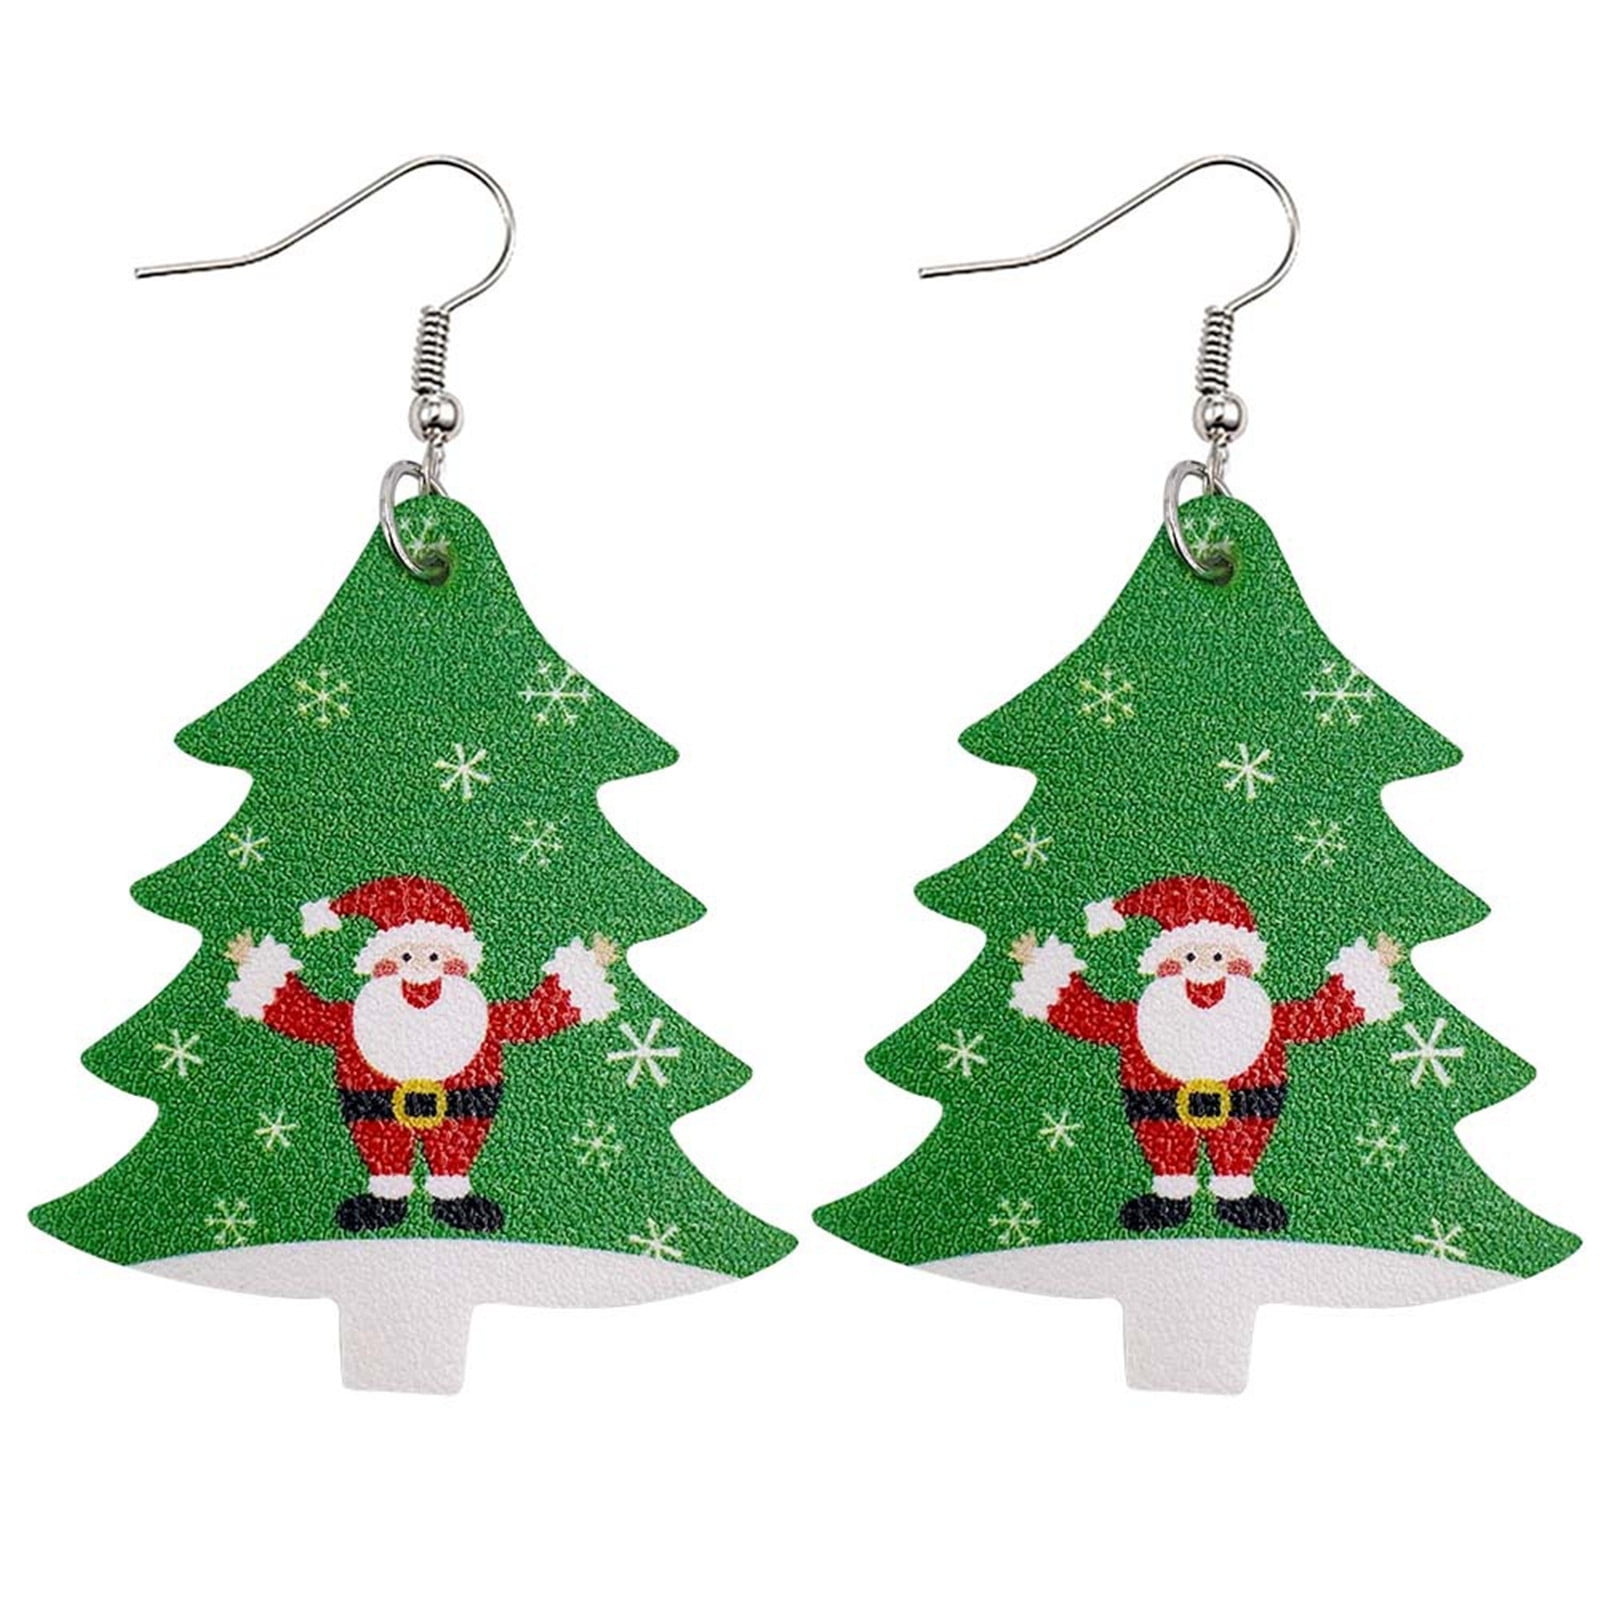 12 Pairs Christmas Leather Earrings Set for Women Teardrop Dangle Earrings for Girls Christmas Gifts Jewelry Including Elk Christmas Tree,Snowflake Santa Claus Belt